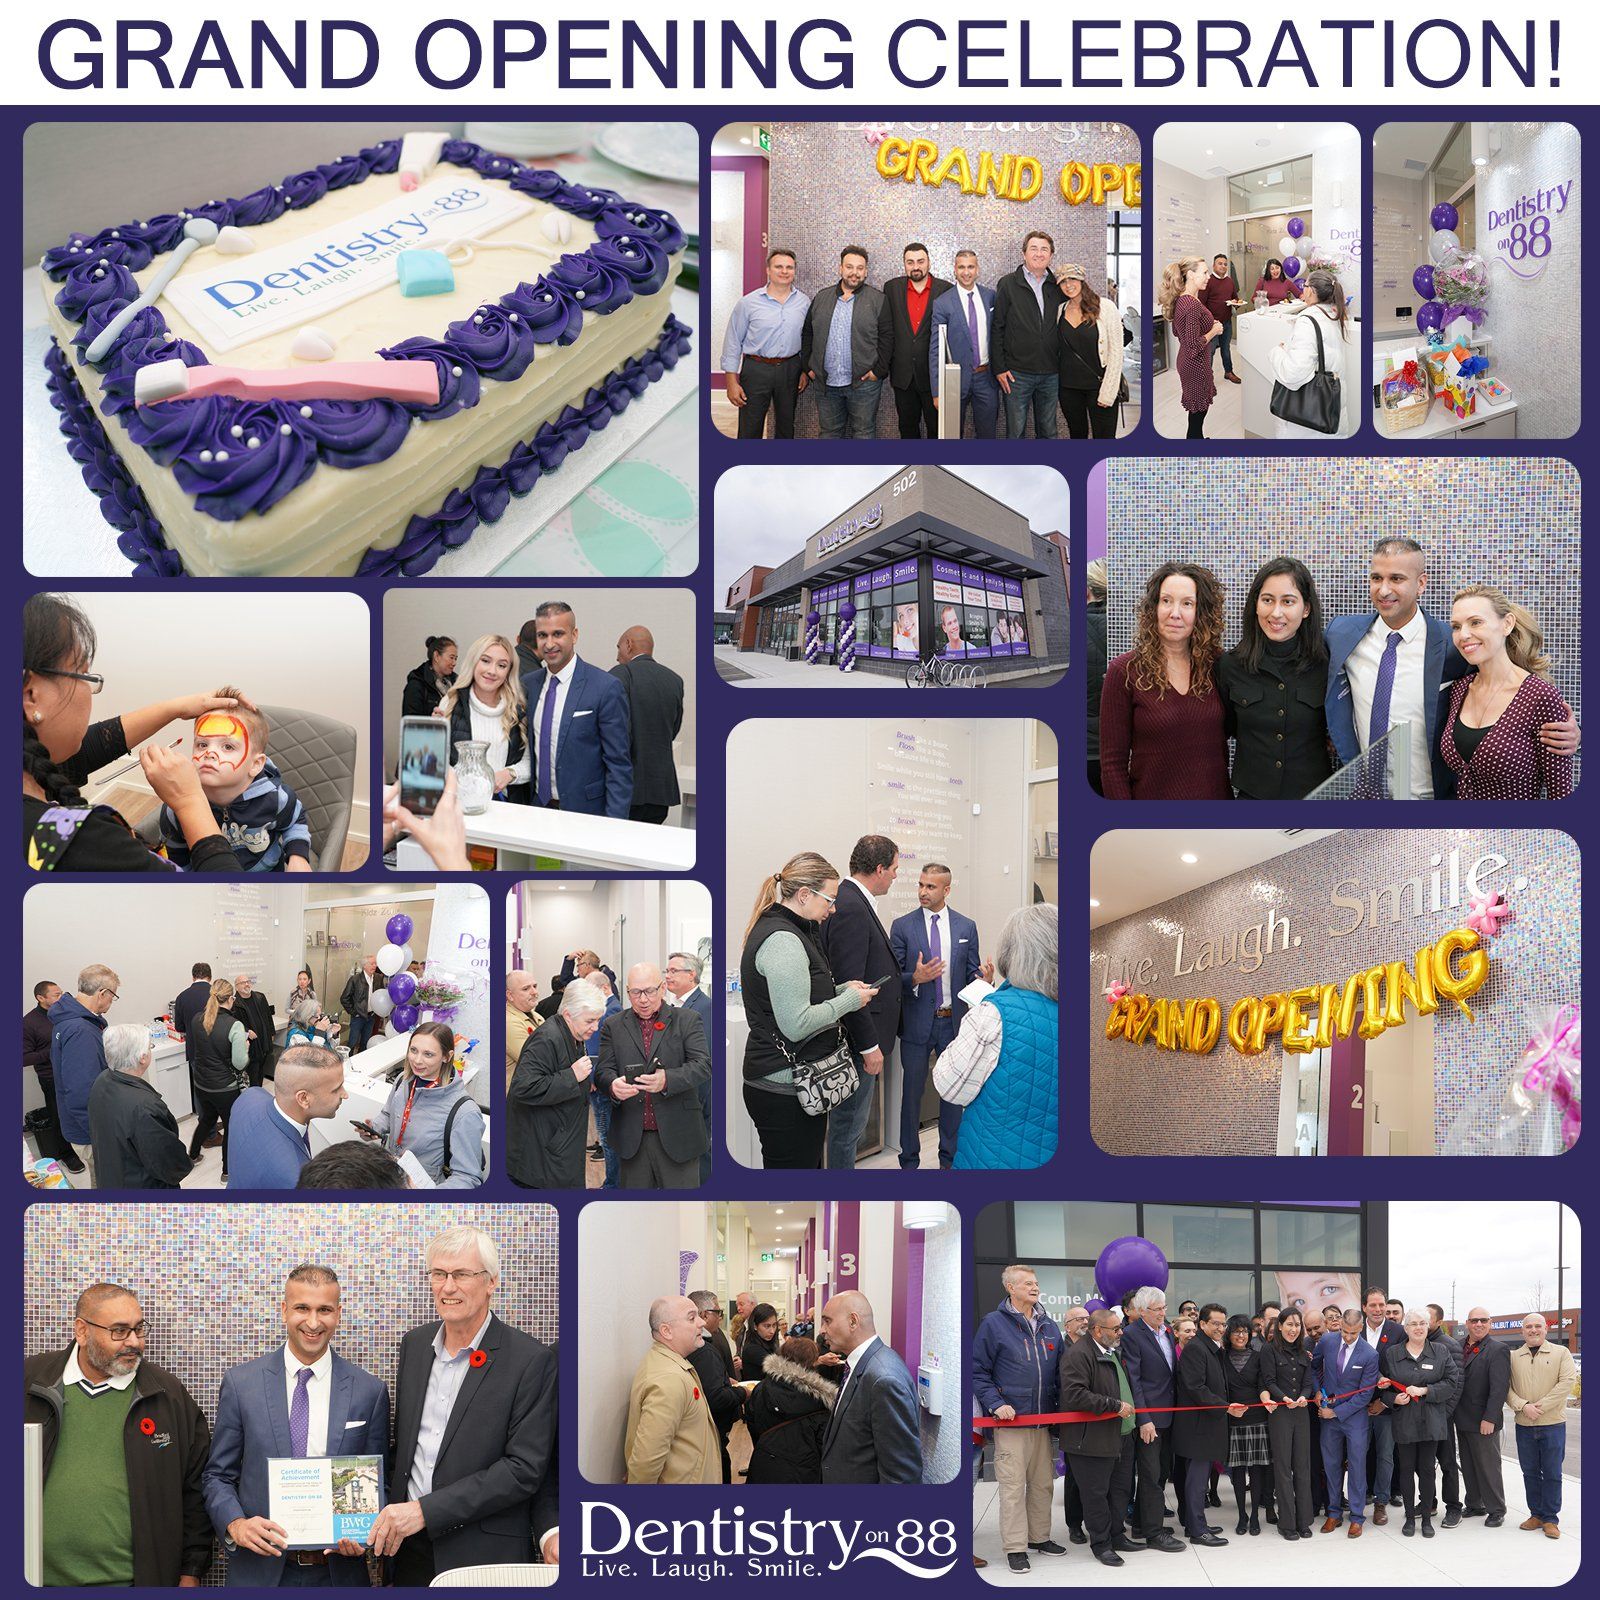 Grand Opening Celebration Dentistry on 88